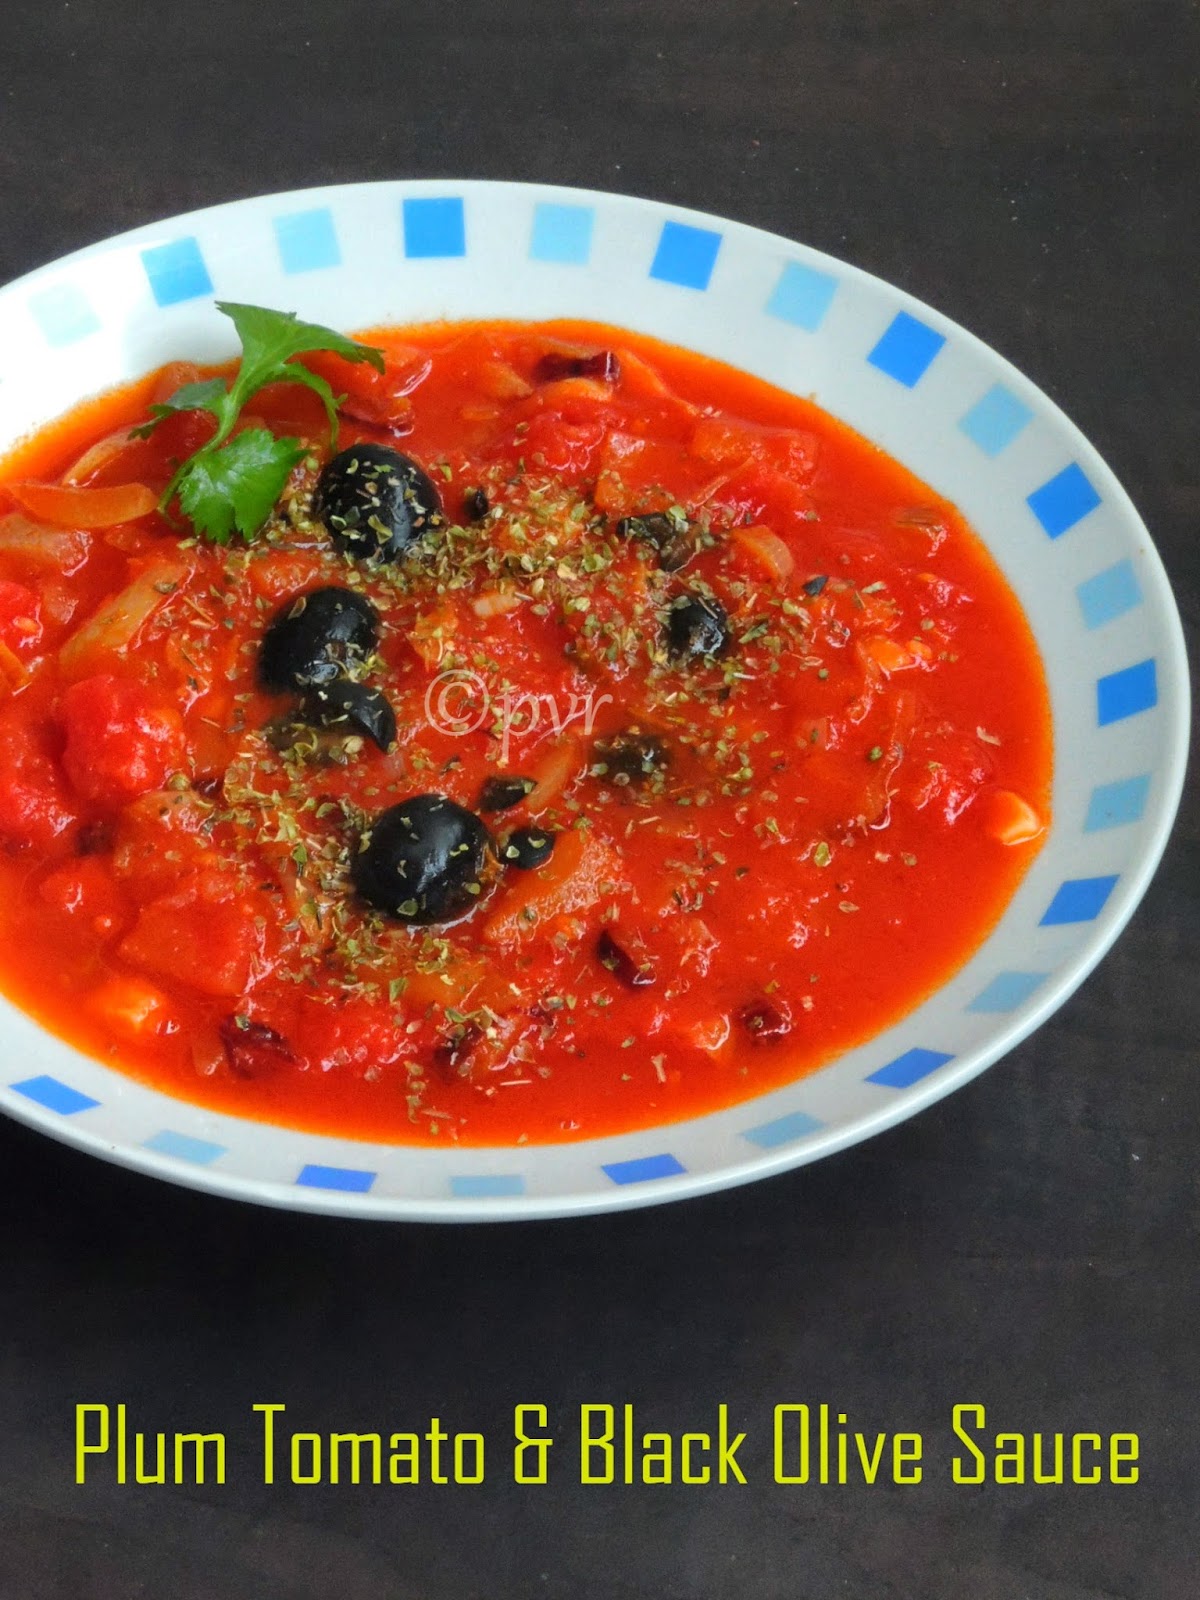 Plum tomato and black olive sauce